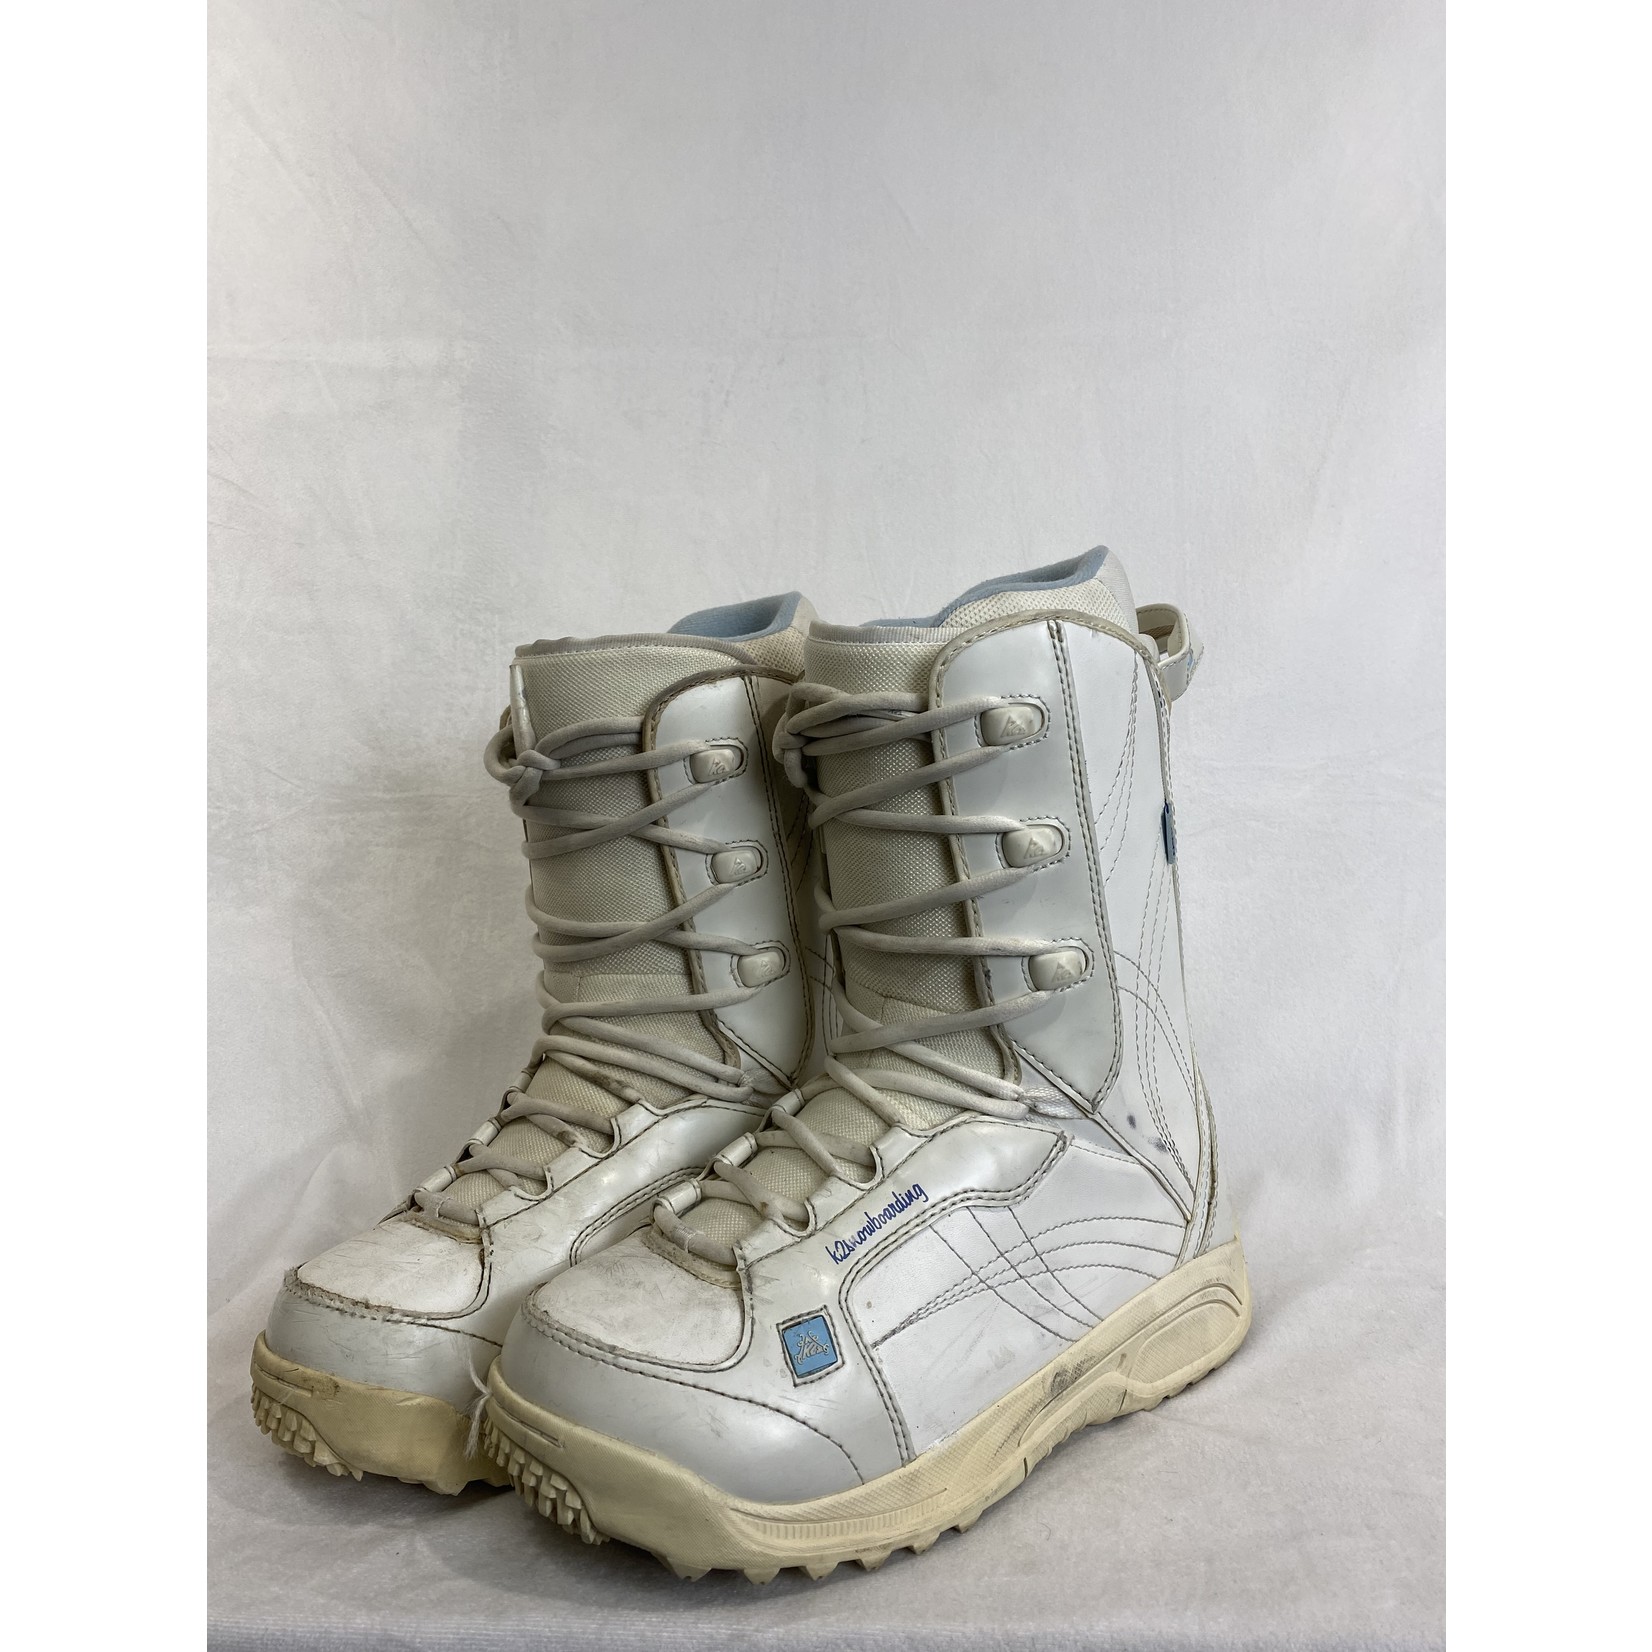 K2 K2 Plush Snowboard Boots, Size 8.5 WMNS